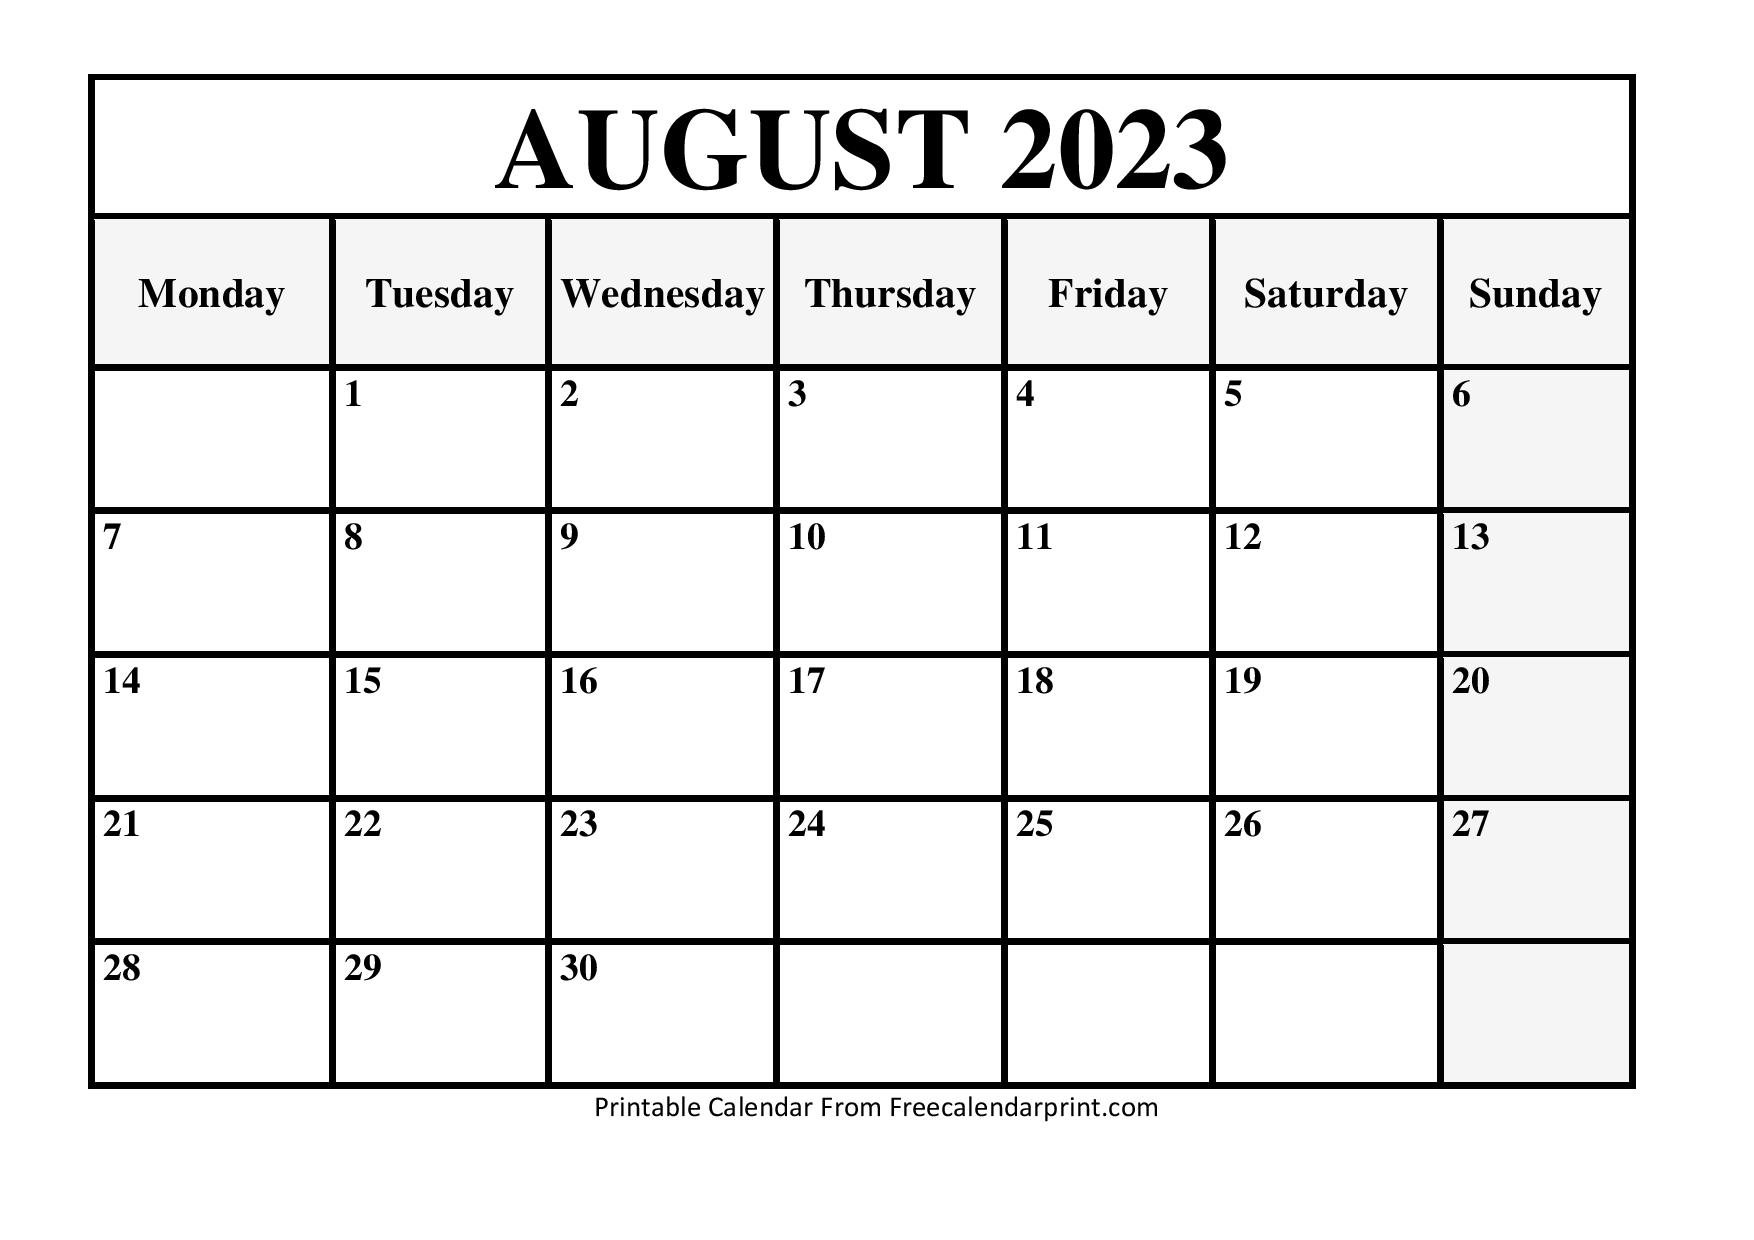 August 2023 Calendar Free Printable Calendar Free Printable August 